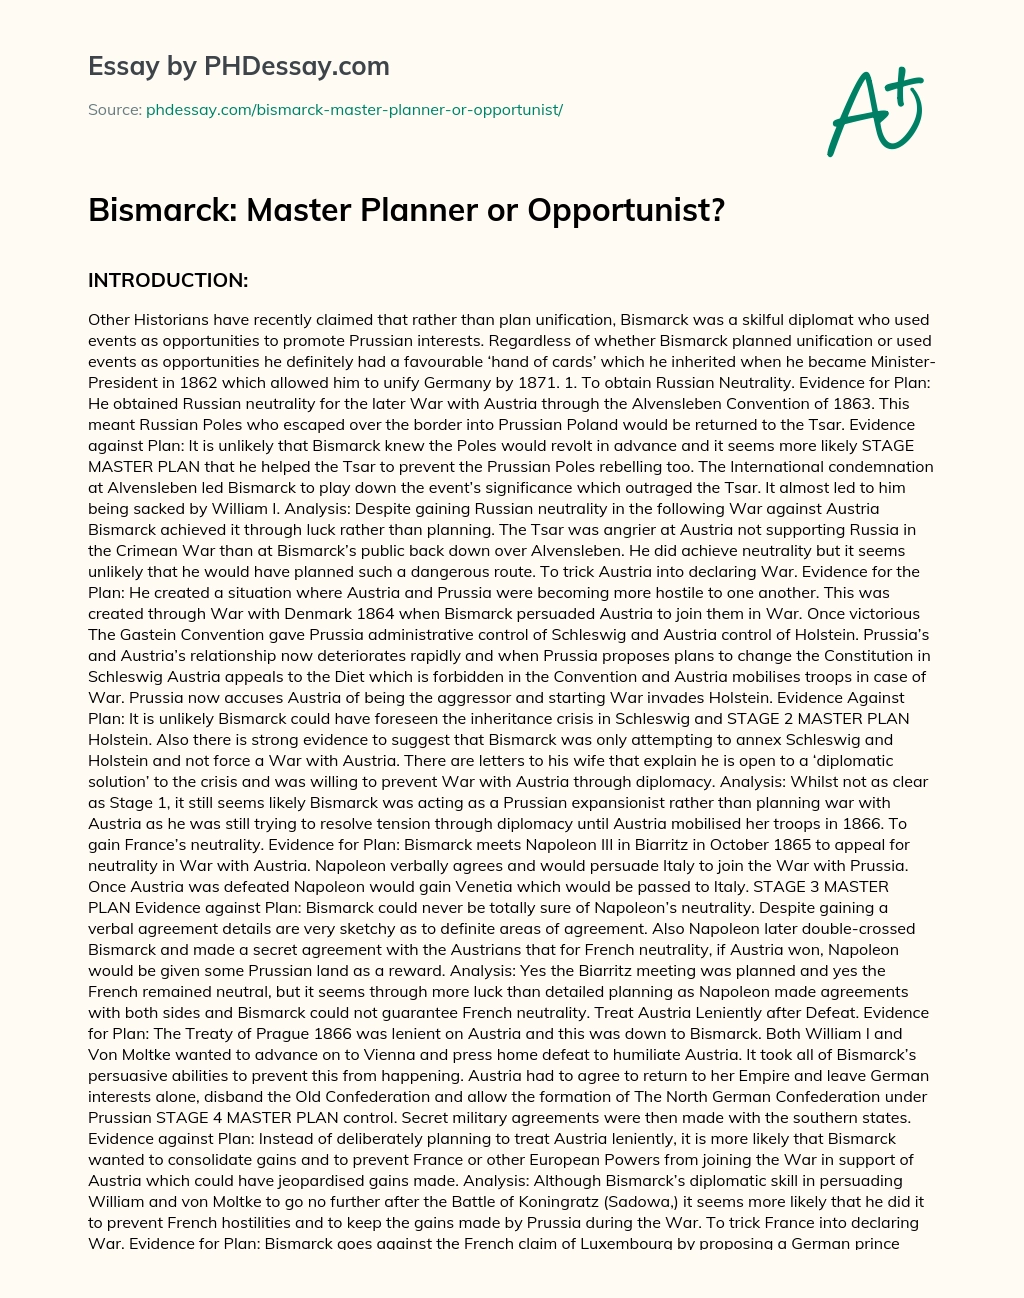 Bismarck: Master Planner or Opportunist? essay